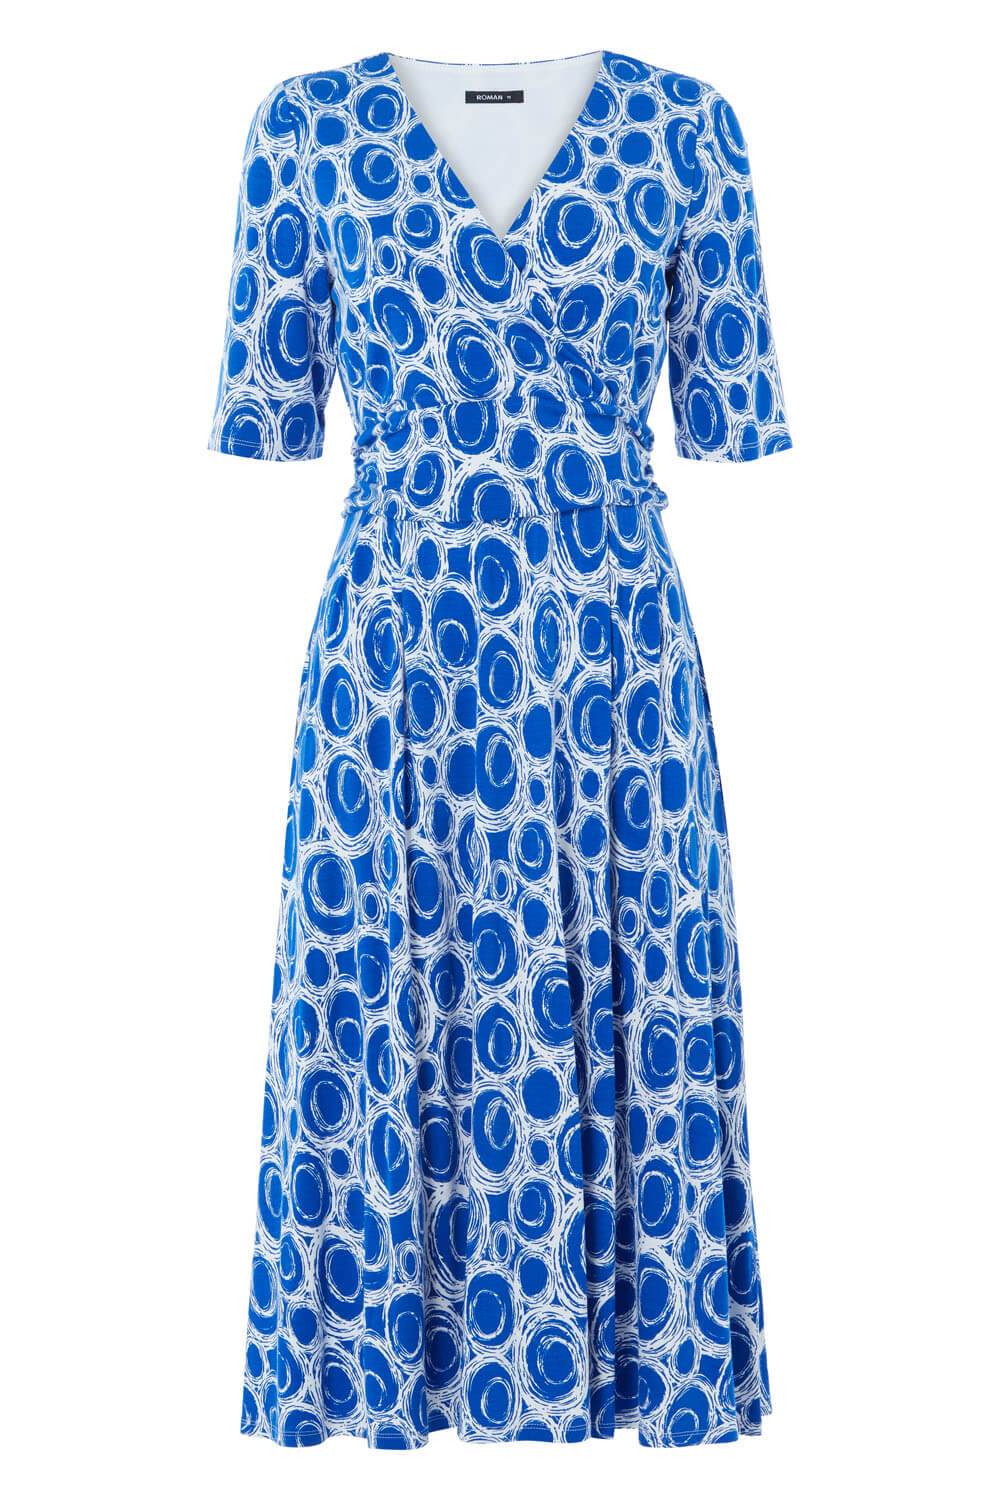 Spot Printed Fit and Flare Dress in Royal Blue - Roman Originals UK